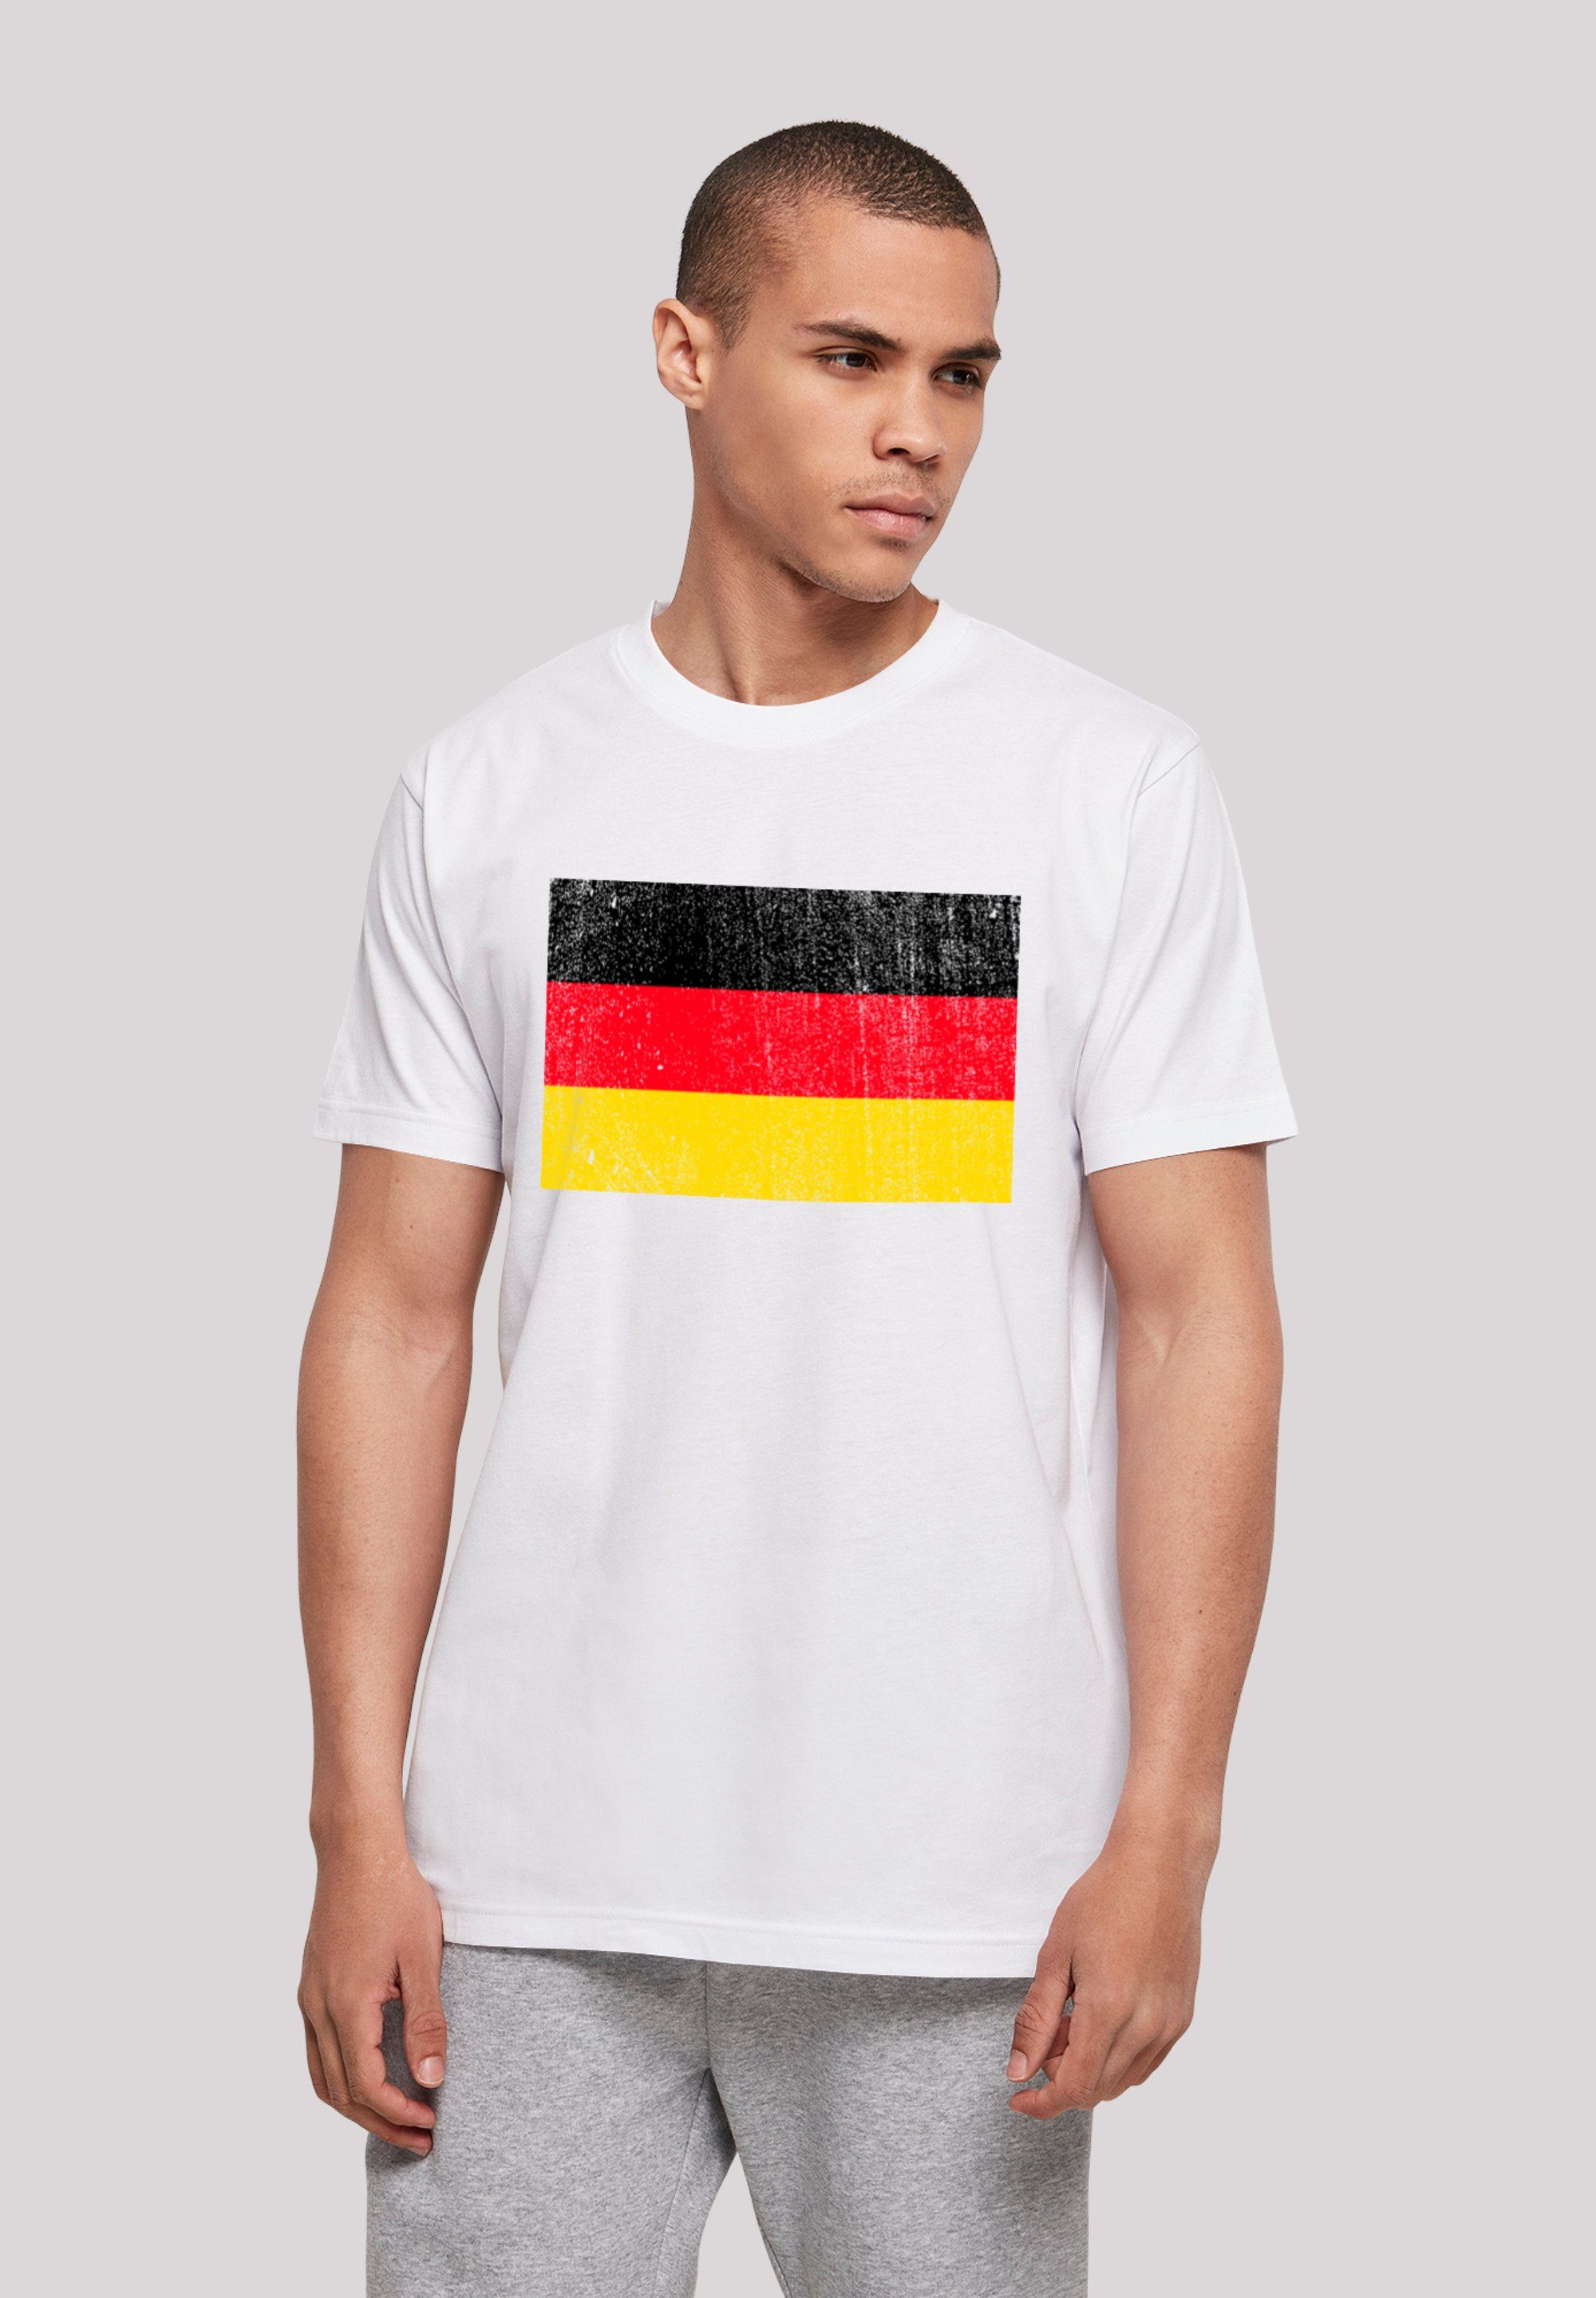 T-Shirt Print F4NT4STIC distressed Deutschland Germany weiß Flagge